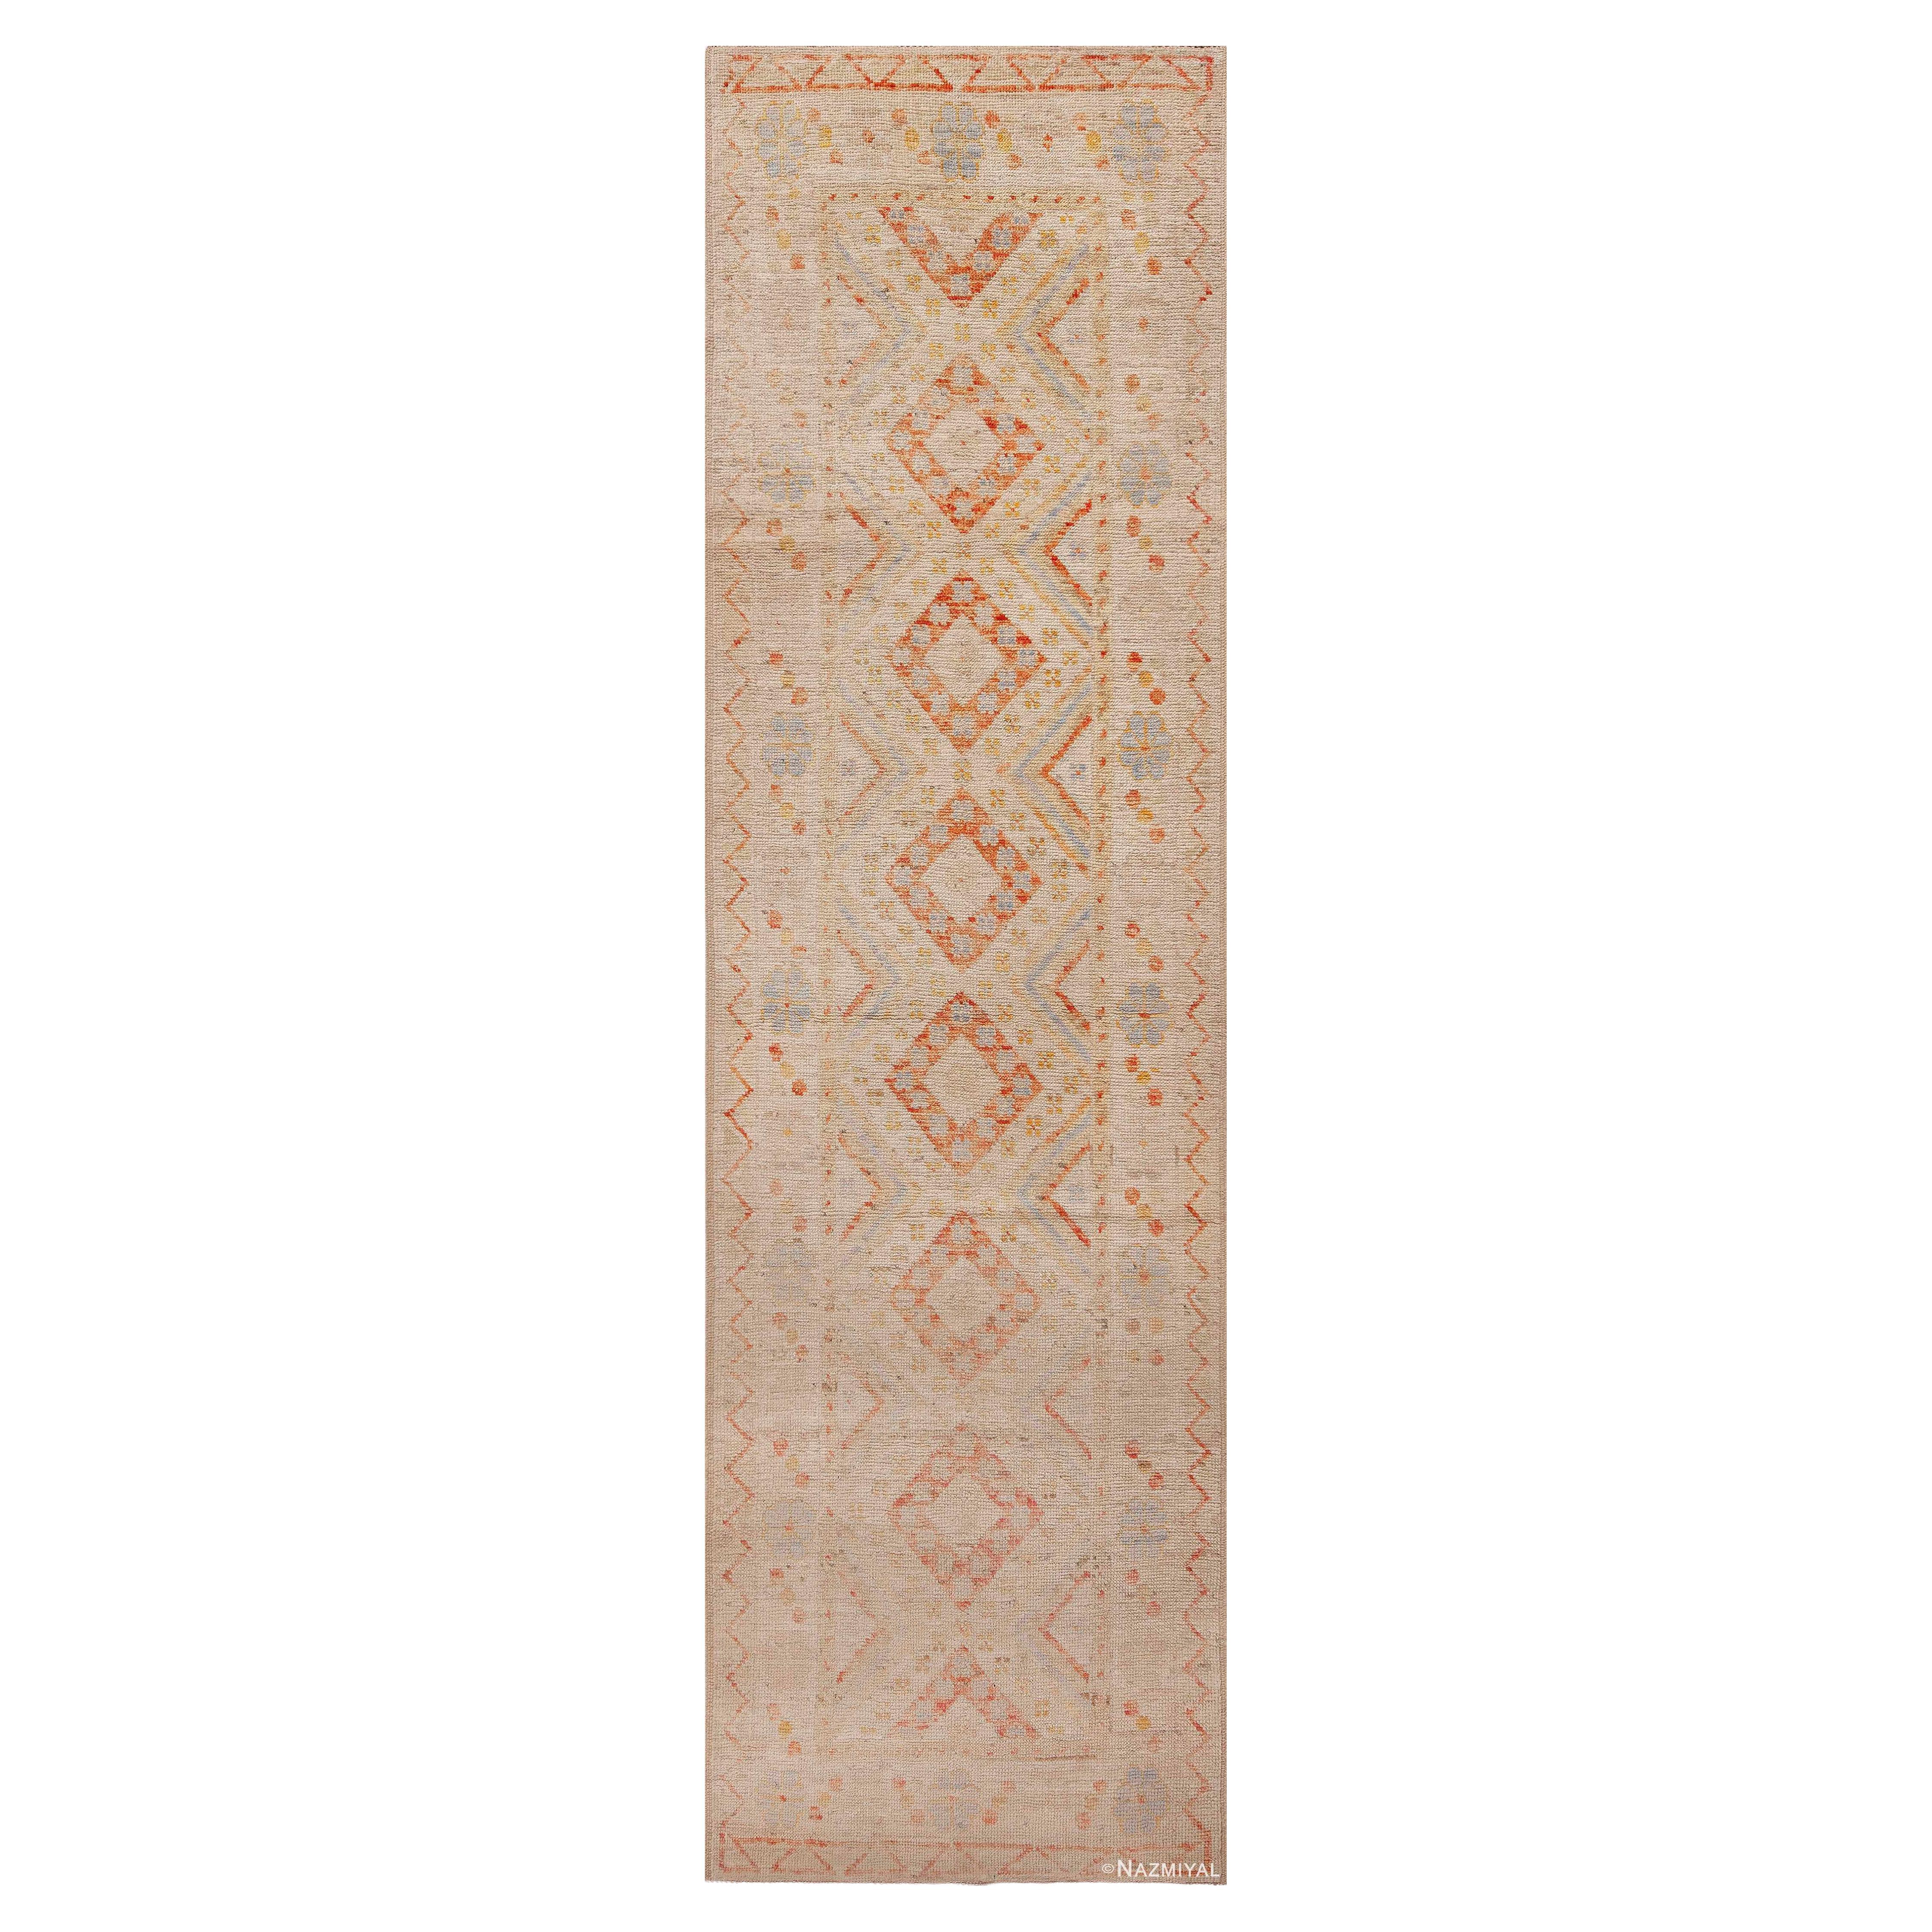 Nazmiyal Collection Modern Tribal Geometric Rustic Runner Rug 2'11" x 9'10" For Sale